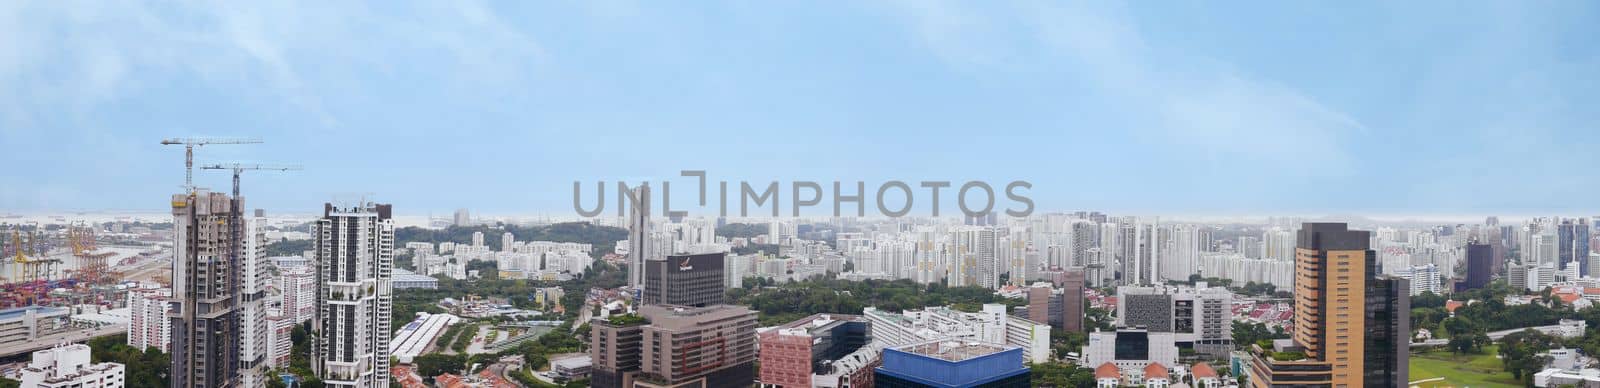 panaroma singapore city buildings sunny day  by towfiq007